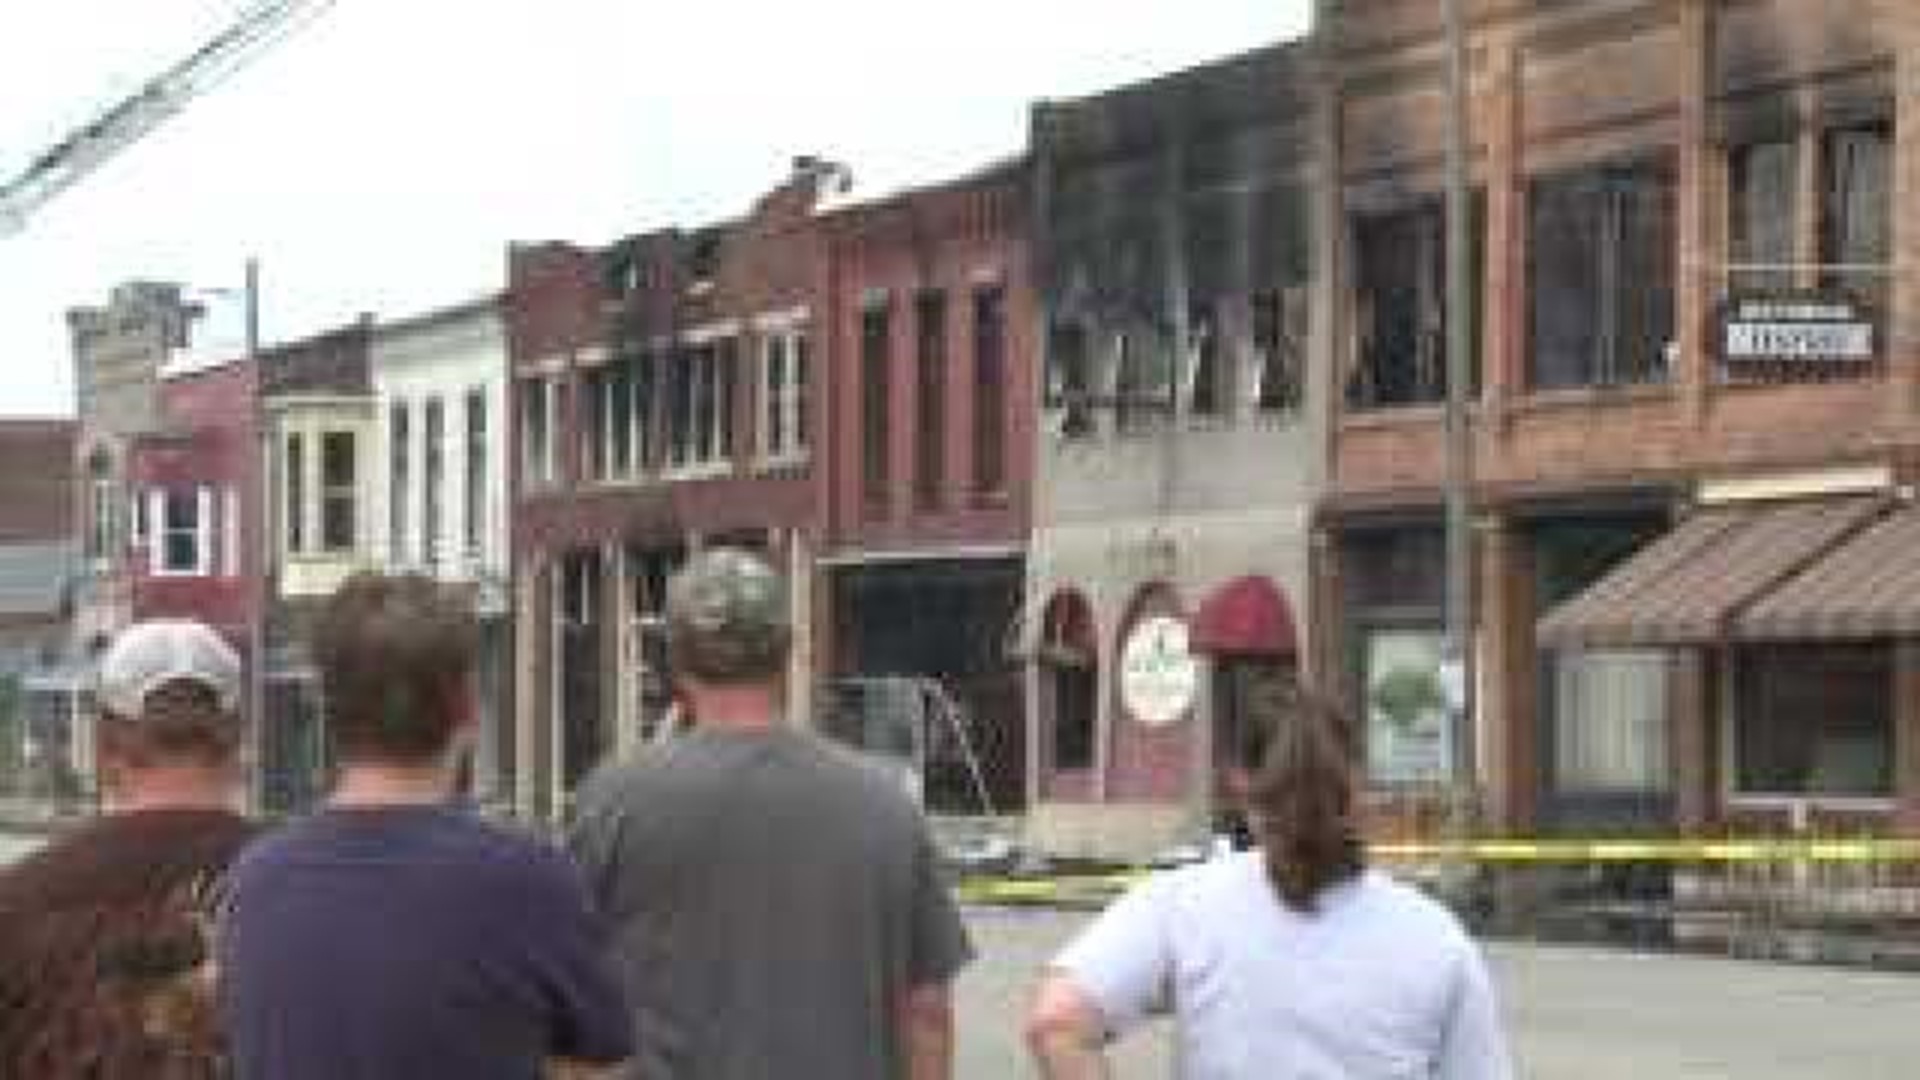 Prophetstown residents in shock after devastating downtown fire